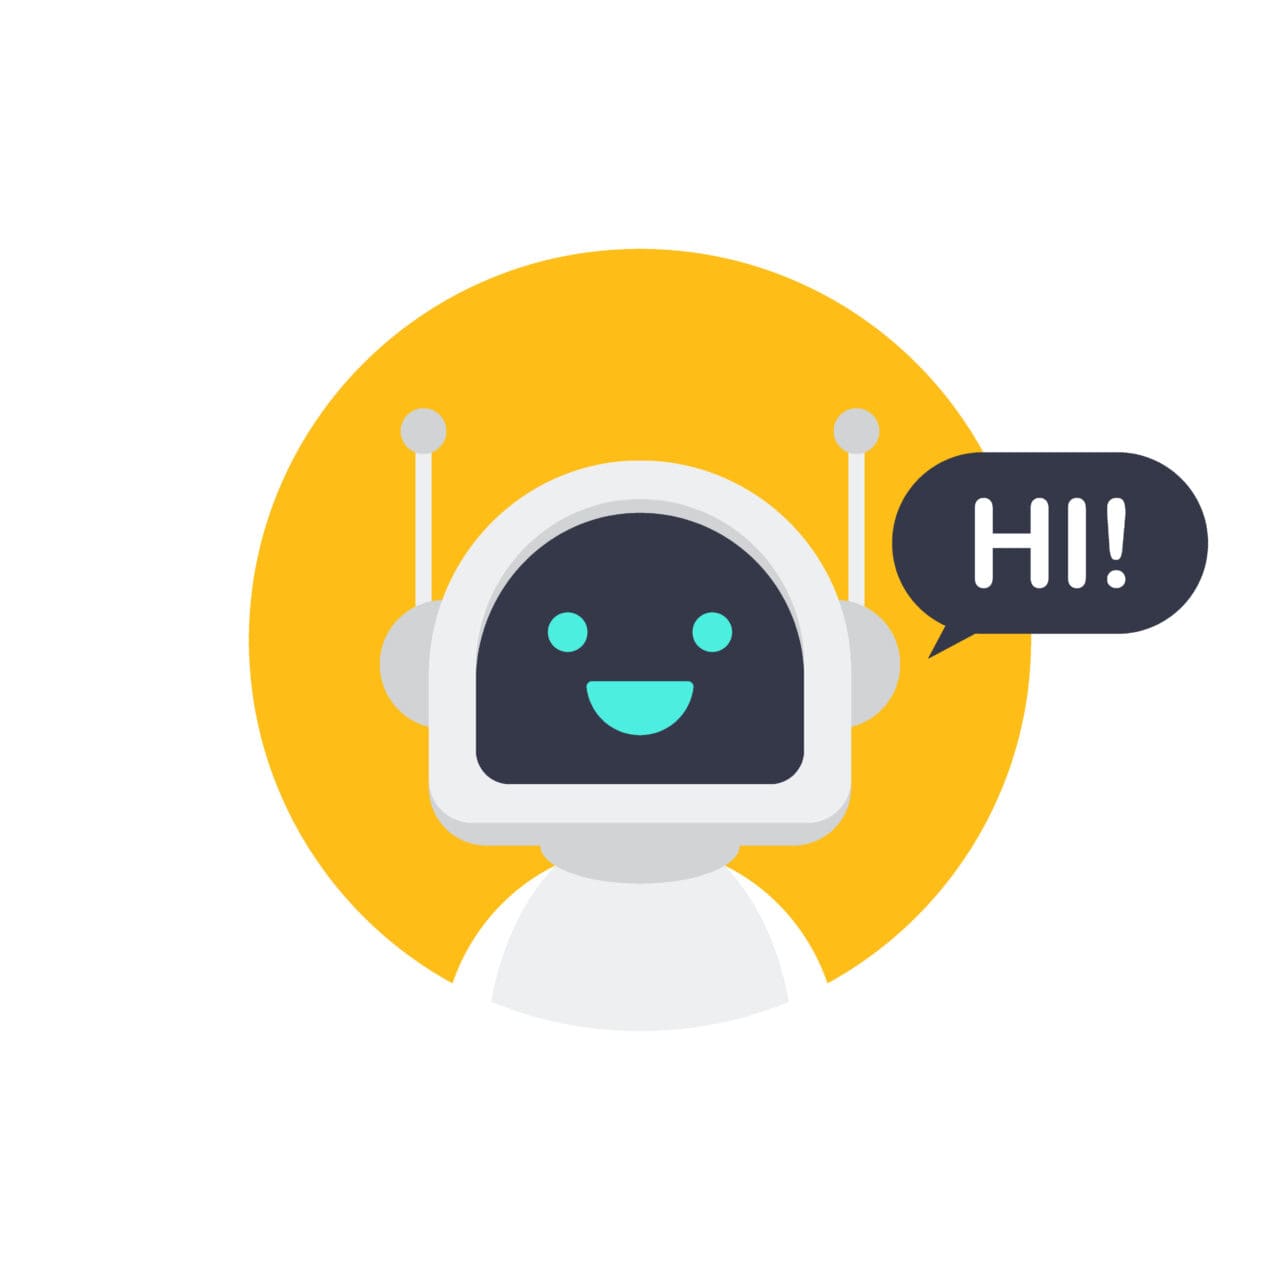 7315543 Robot icon. Bot sign design. Chatbot symbol concept